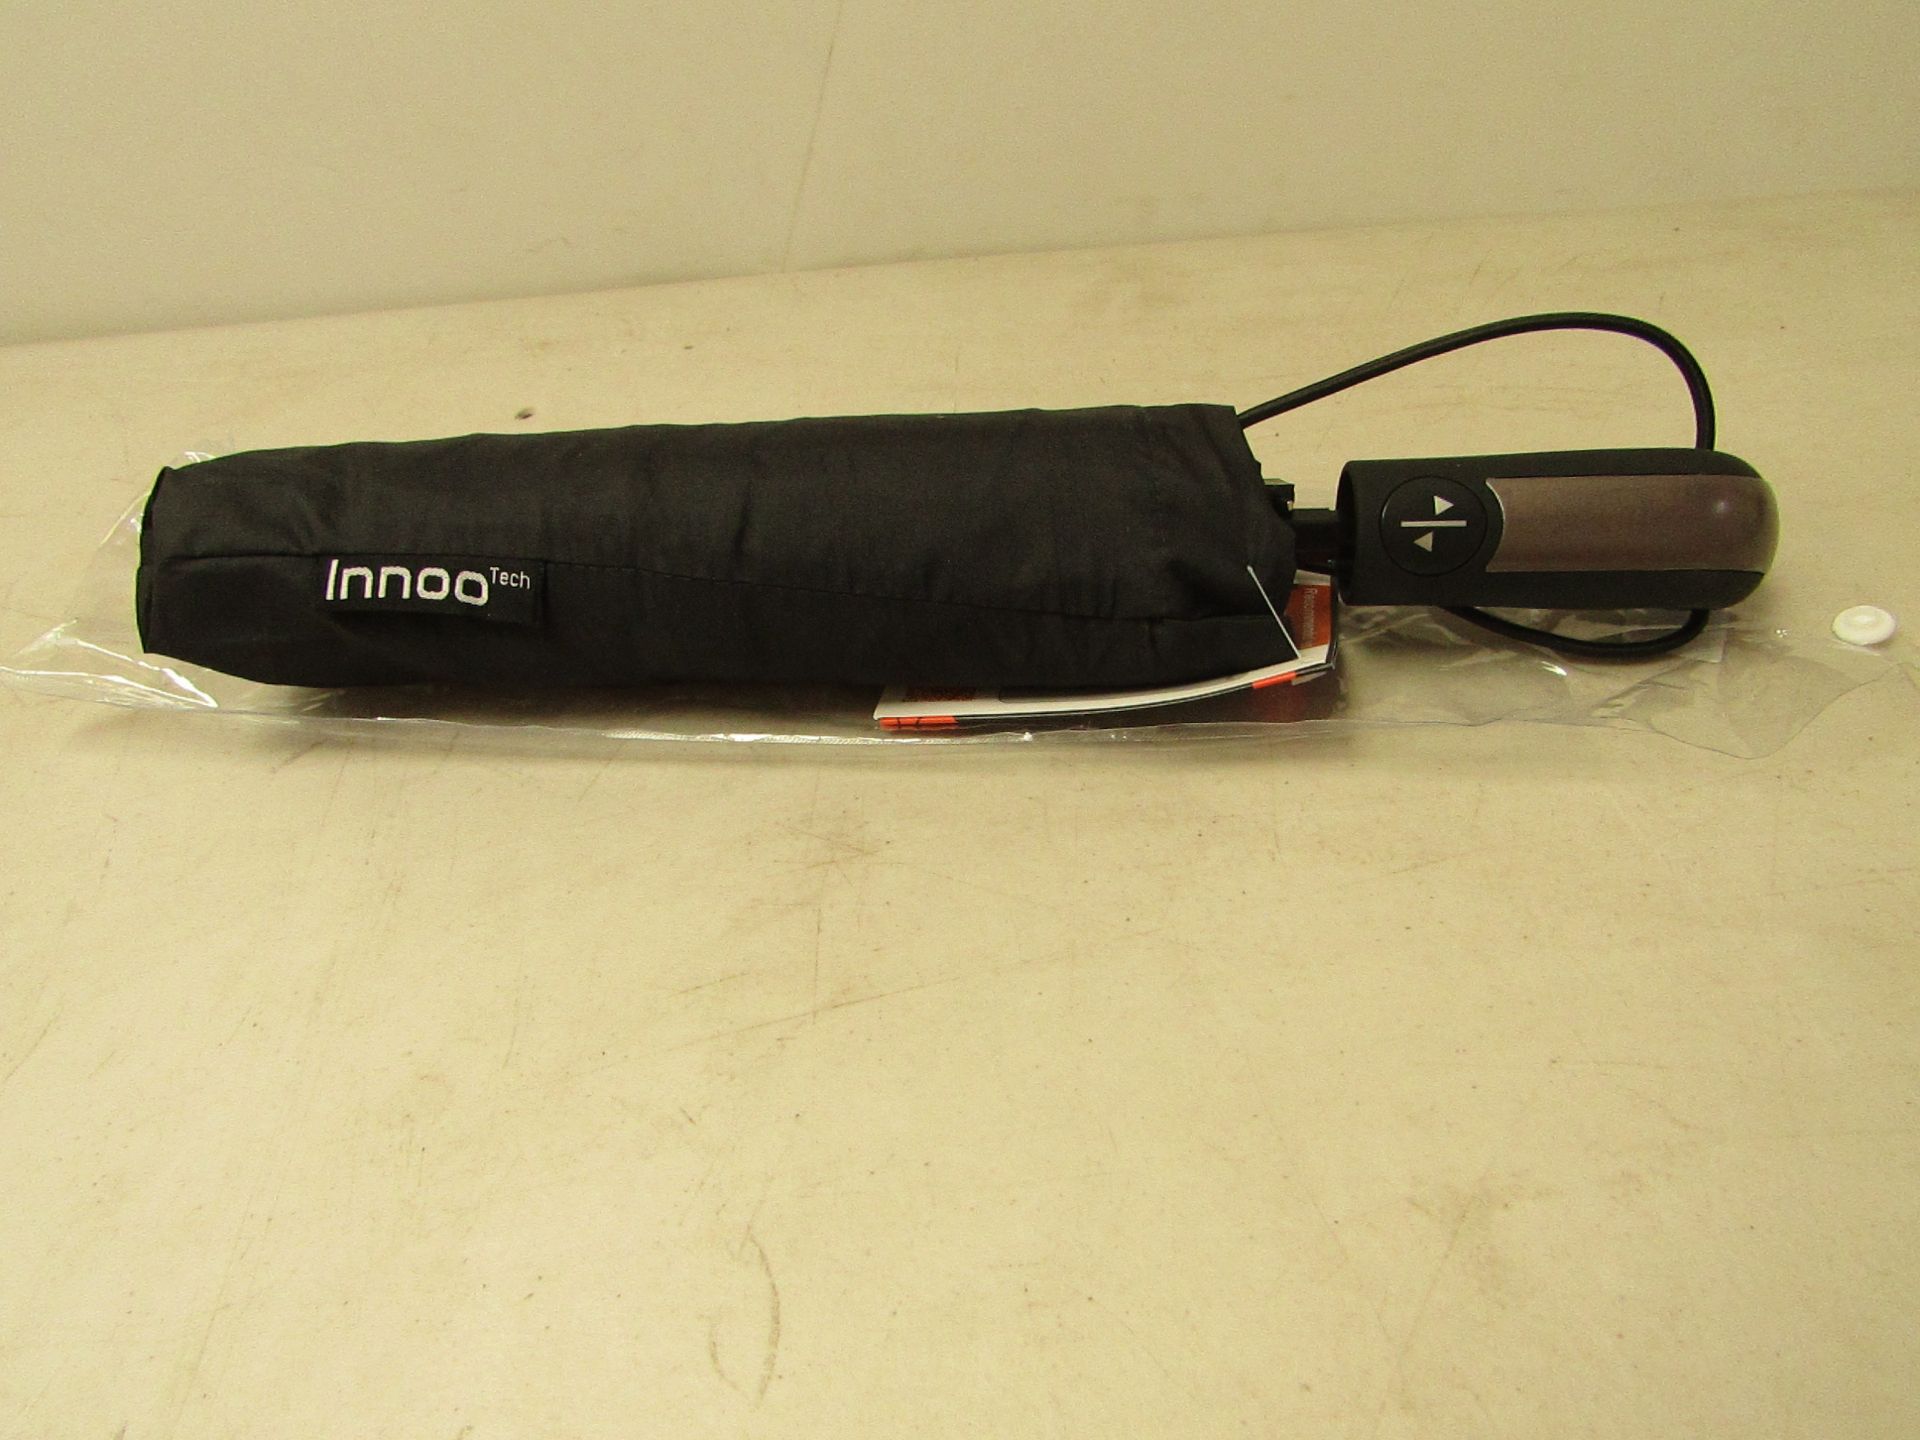 Innoo tech fully automatic folding umbrella, faulty folding mechanism.